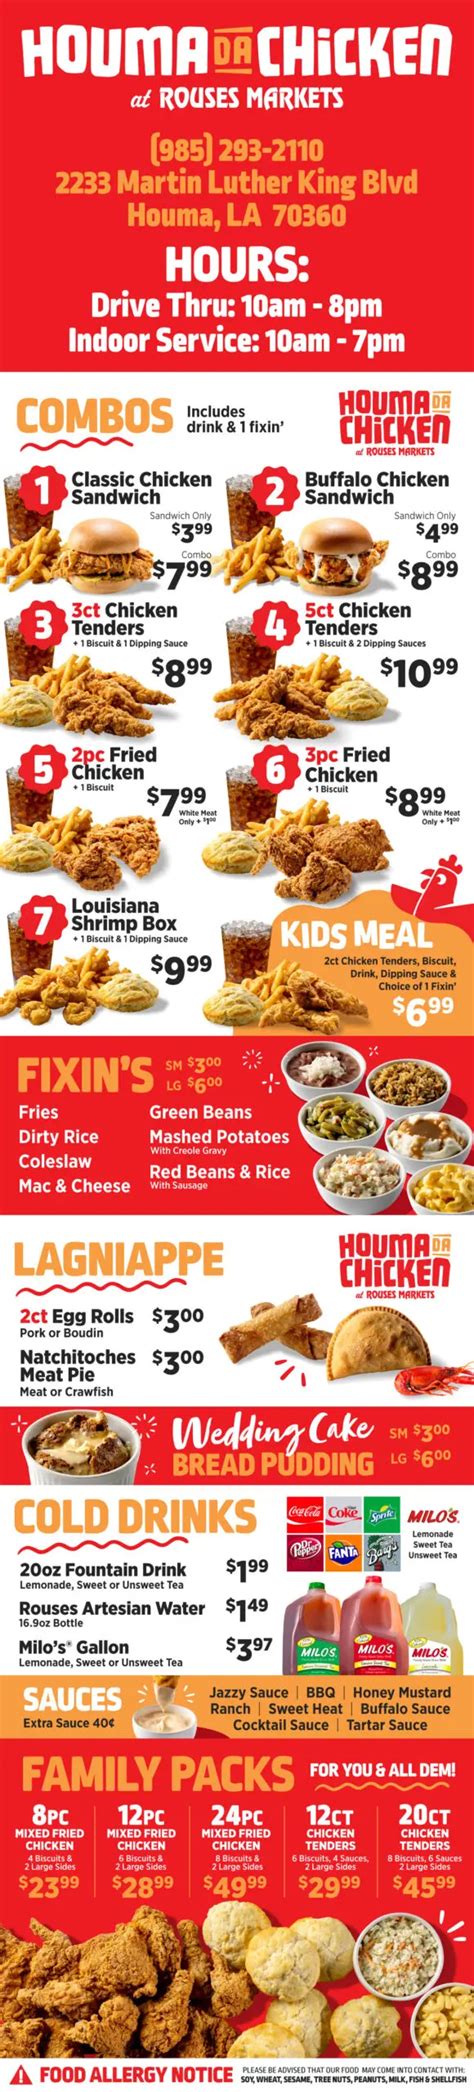 Houma da chicken menu. 'Houma Da Chicken:’ Rouses Markets introduces drive-thru chicken restaurant to grocery store - New Orleans CityBusiness https://neworleanscitybusiness.com 